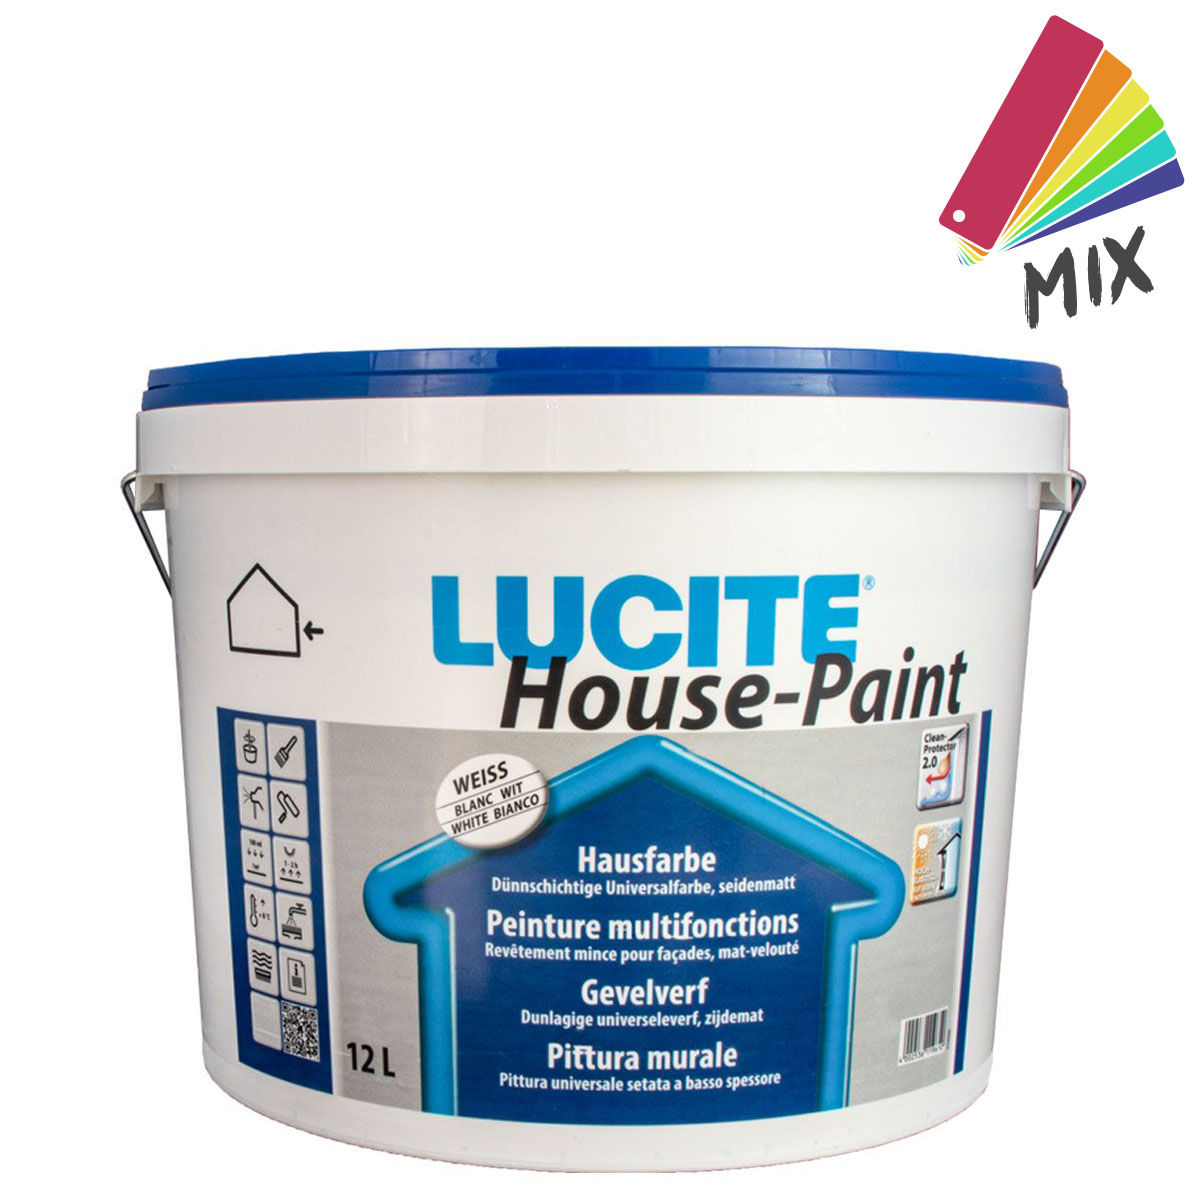 Lucite House Paint 12L wunschfarbton PG1 , Hausfarbe, Fassadenfarbe